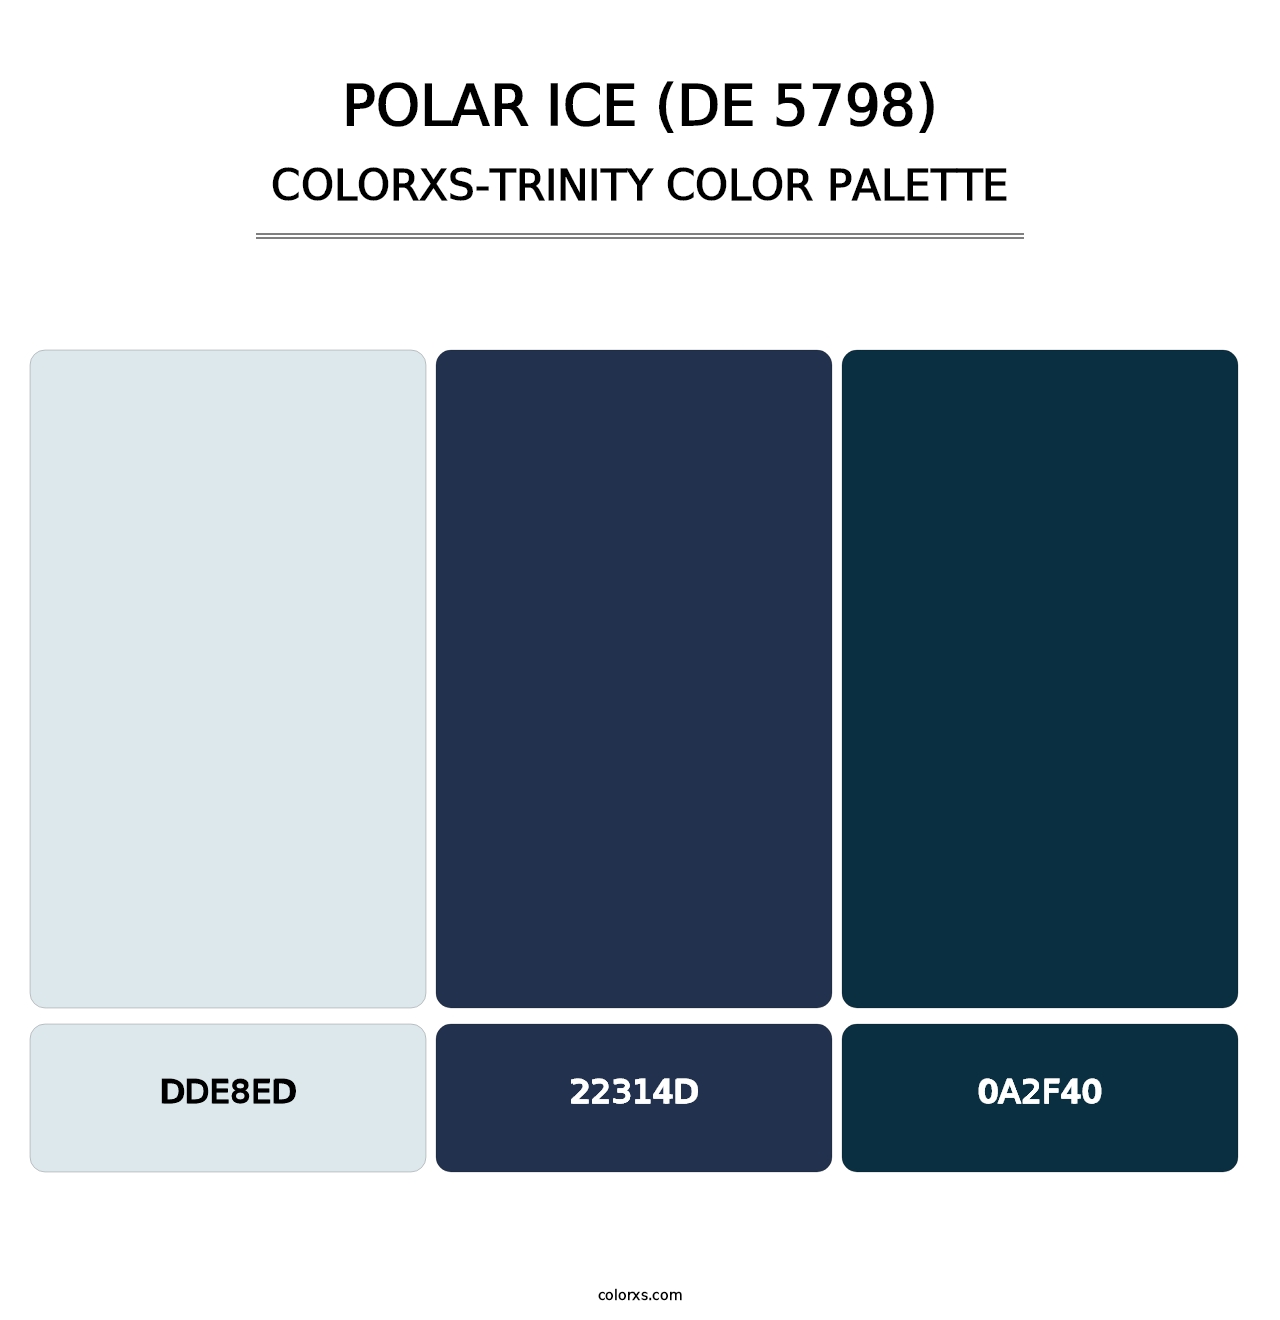 Polar Ice (DE 5798) - Colorxs Trinity Palette